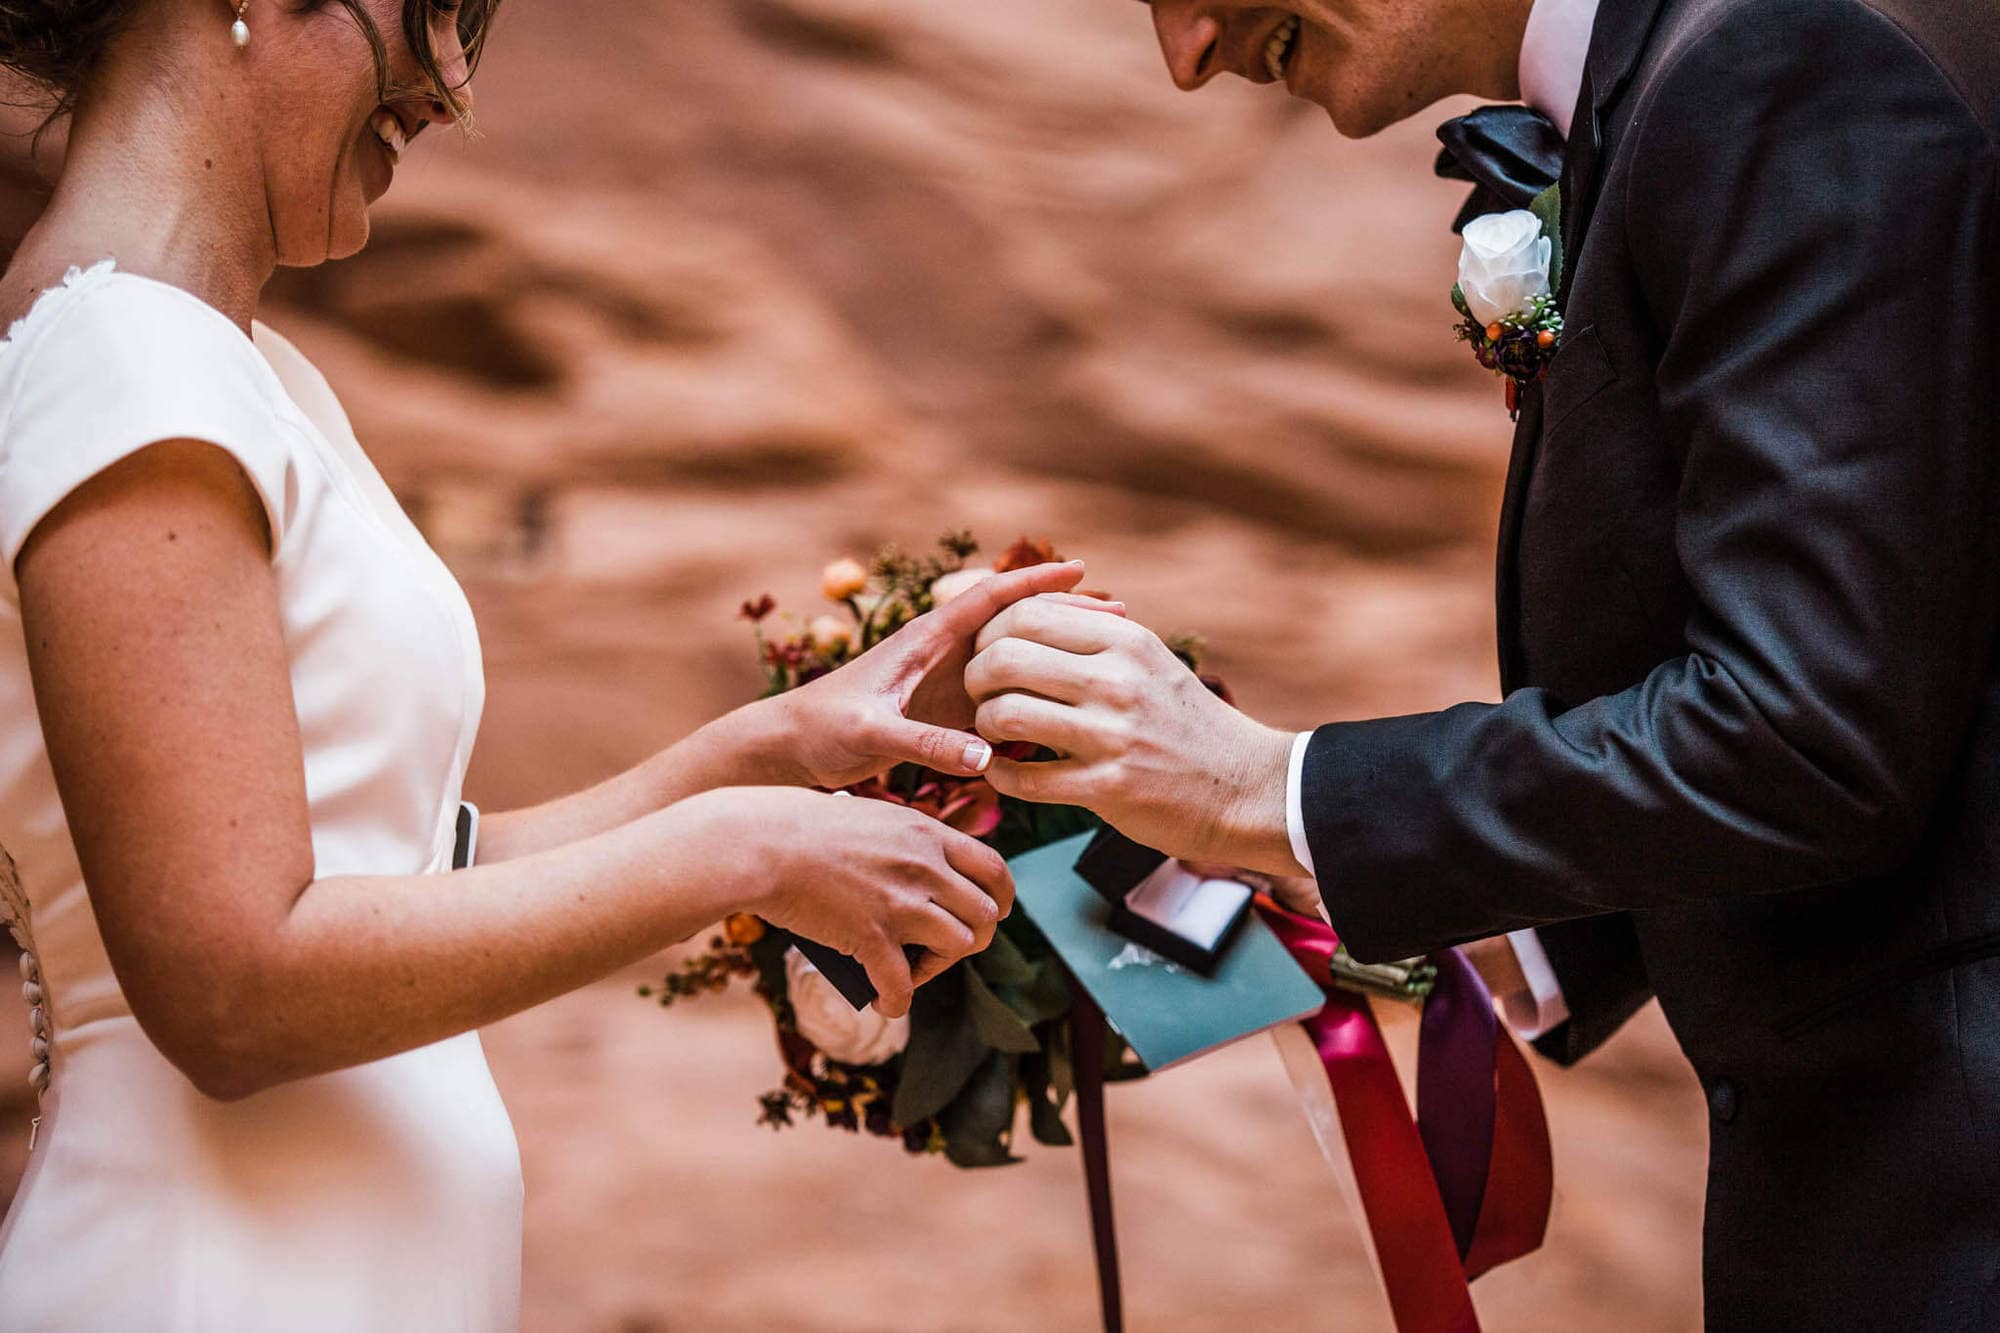 https://aimeeflynnphoto.com/canyonlands-national-park-wedding/